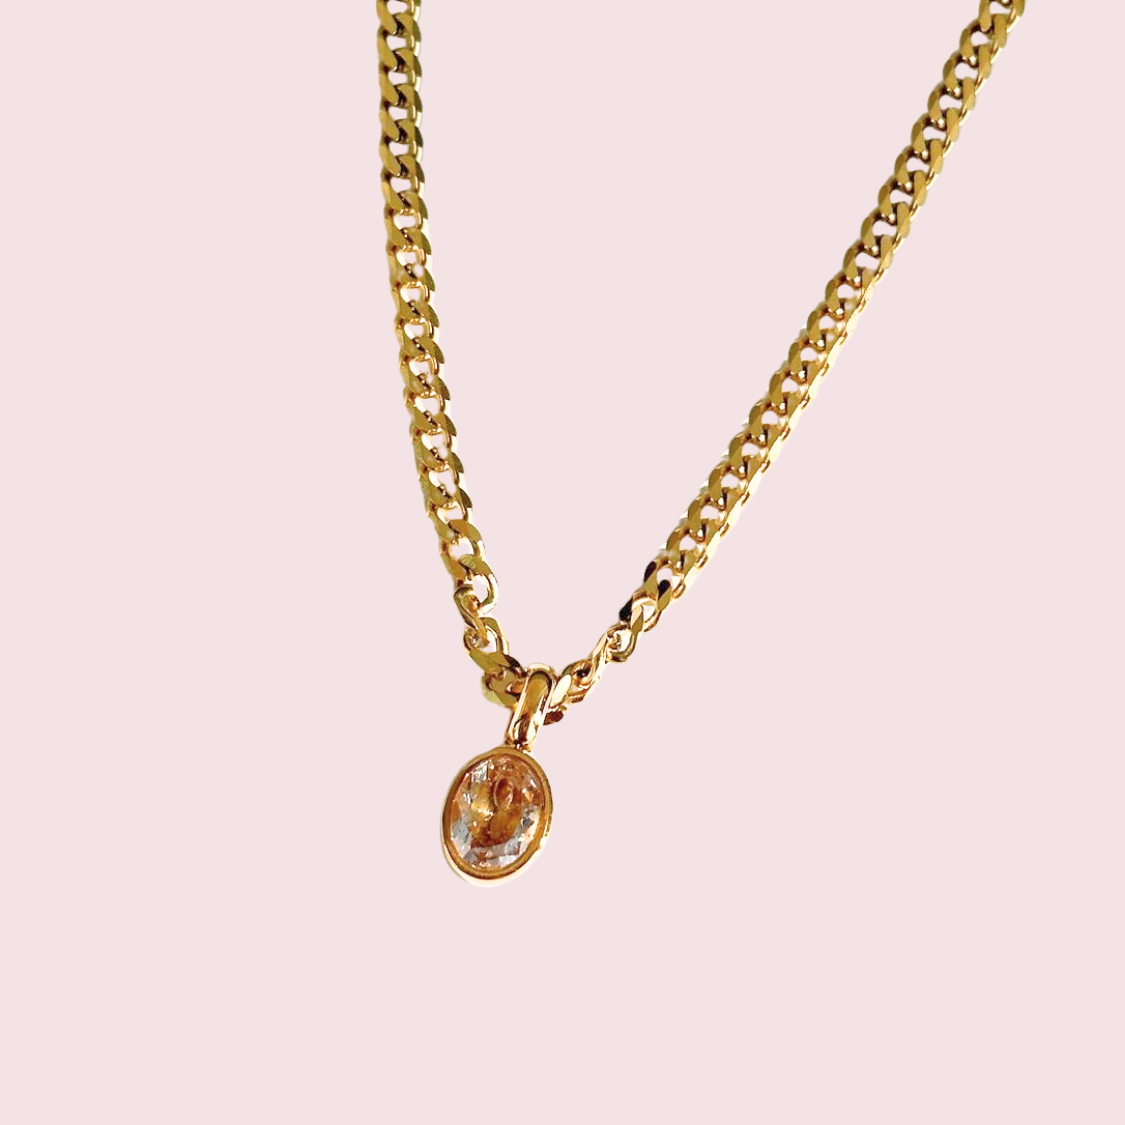 Liliana's Necklace. 💕